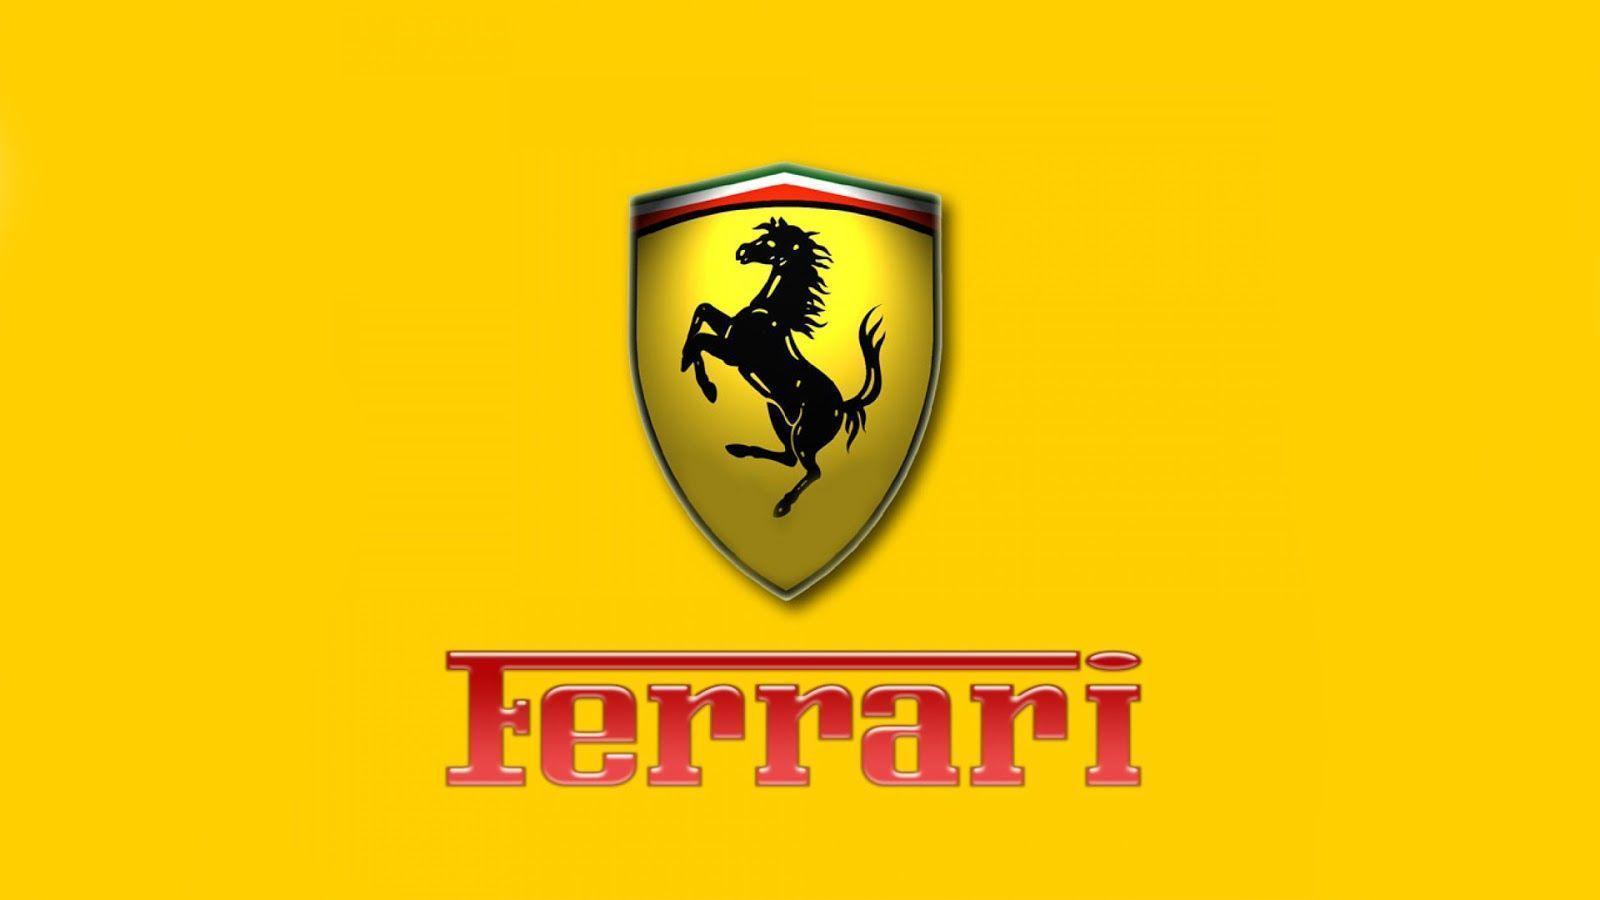 Ferrari Logo 3 43824 Image HD Wallpaper. Wallfoy.com